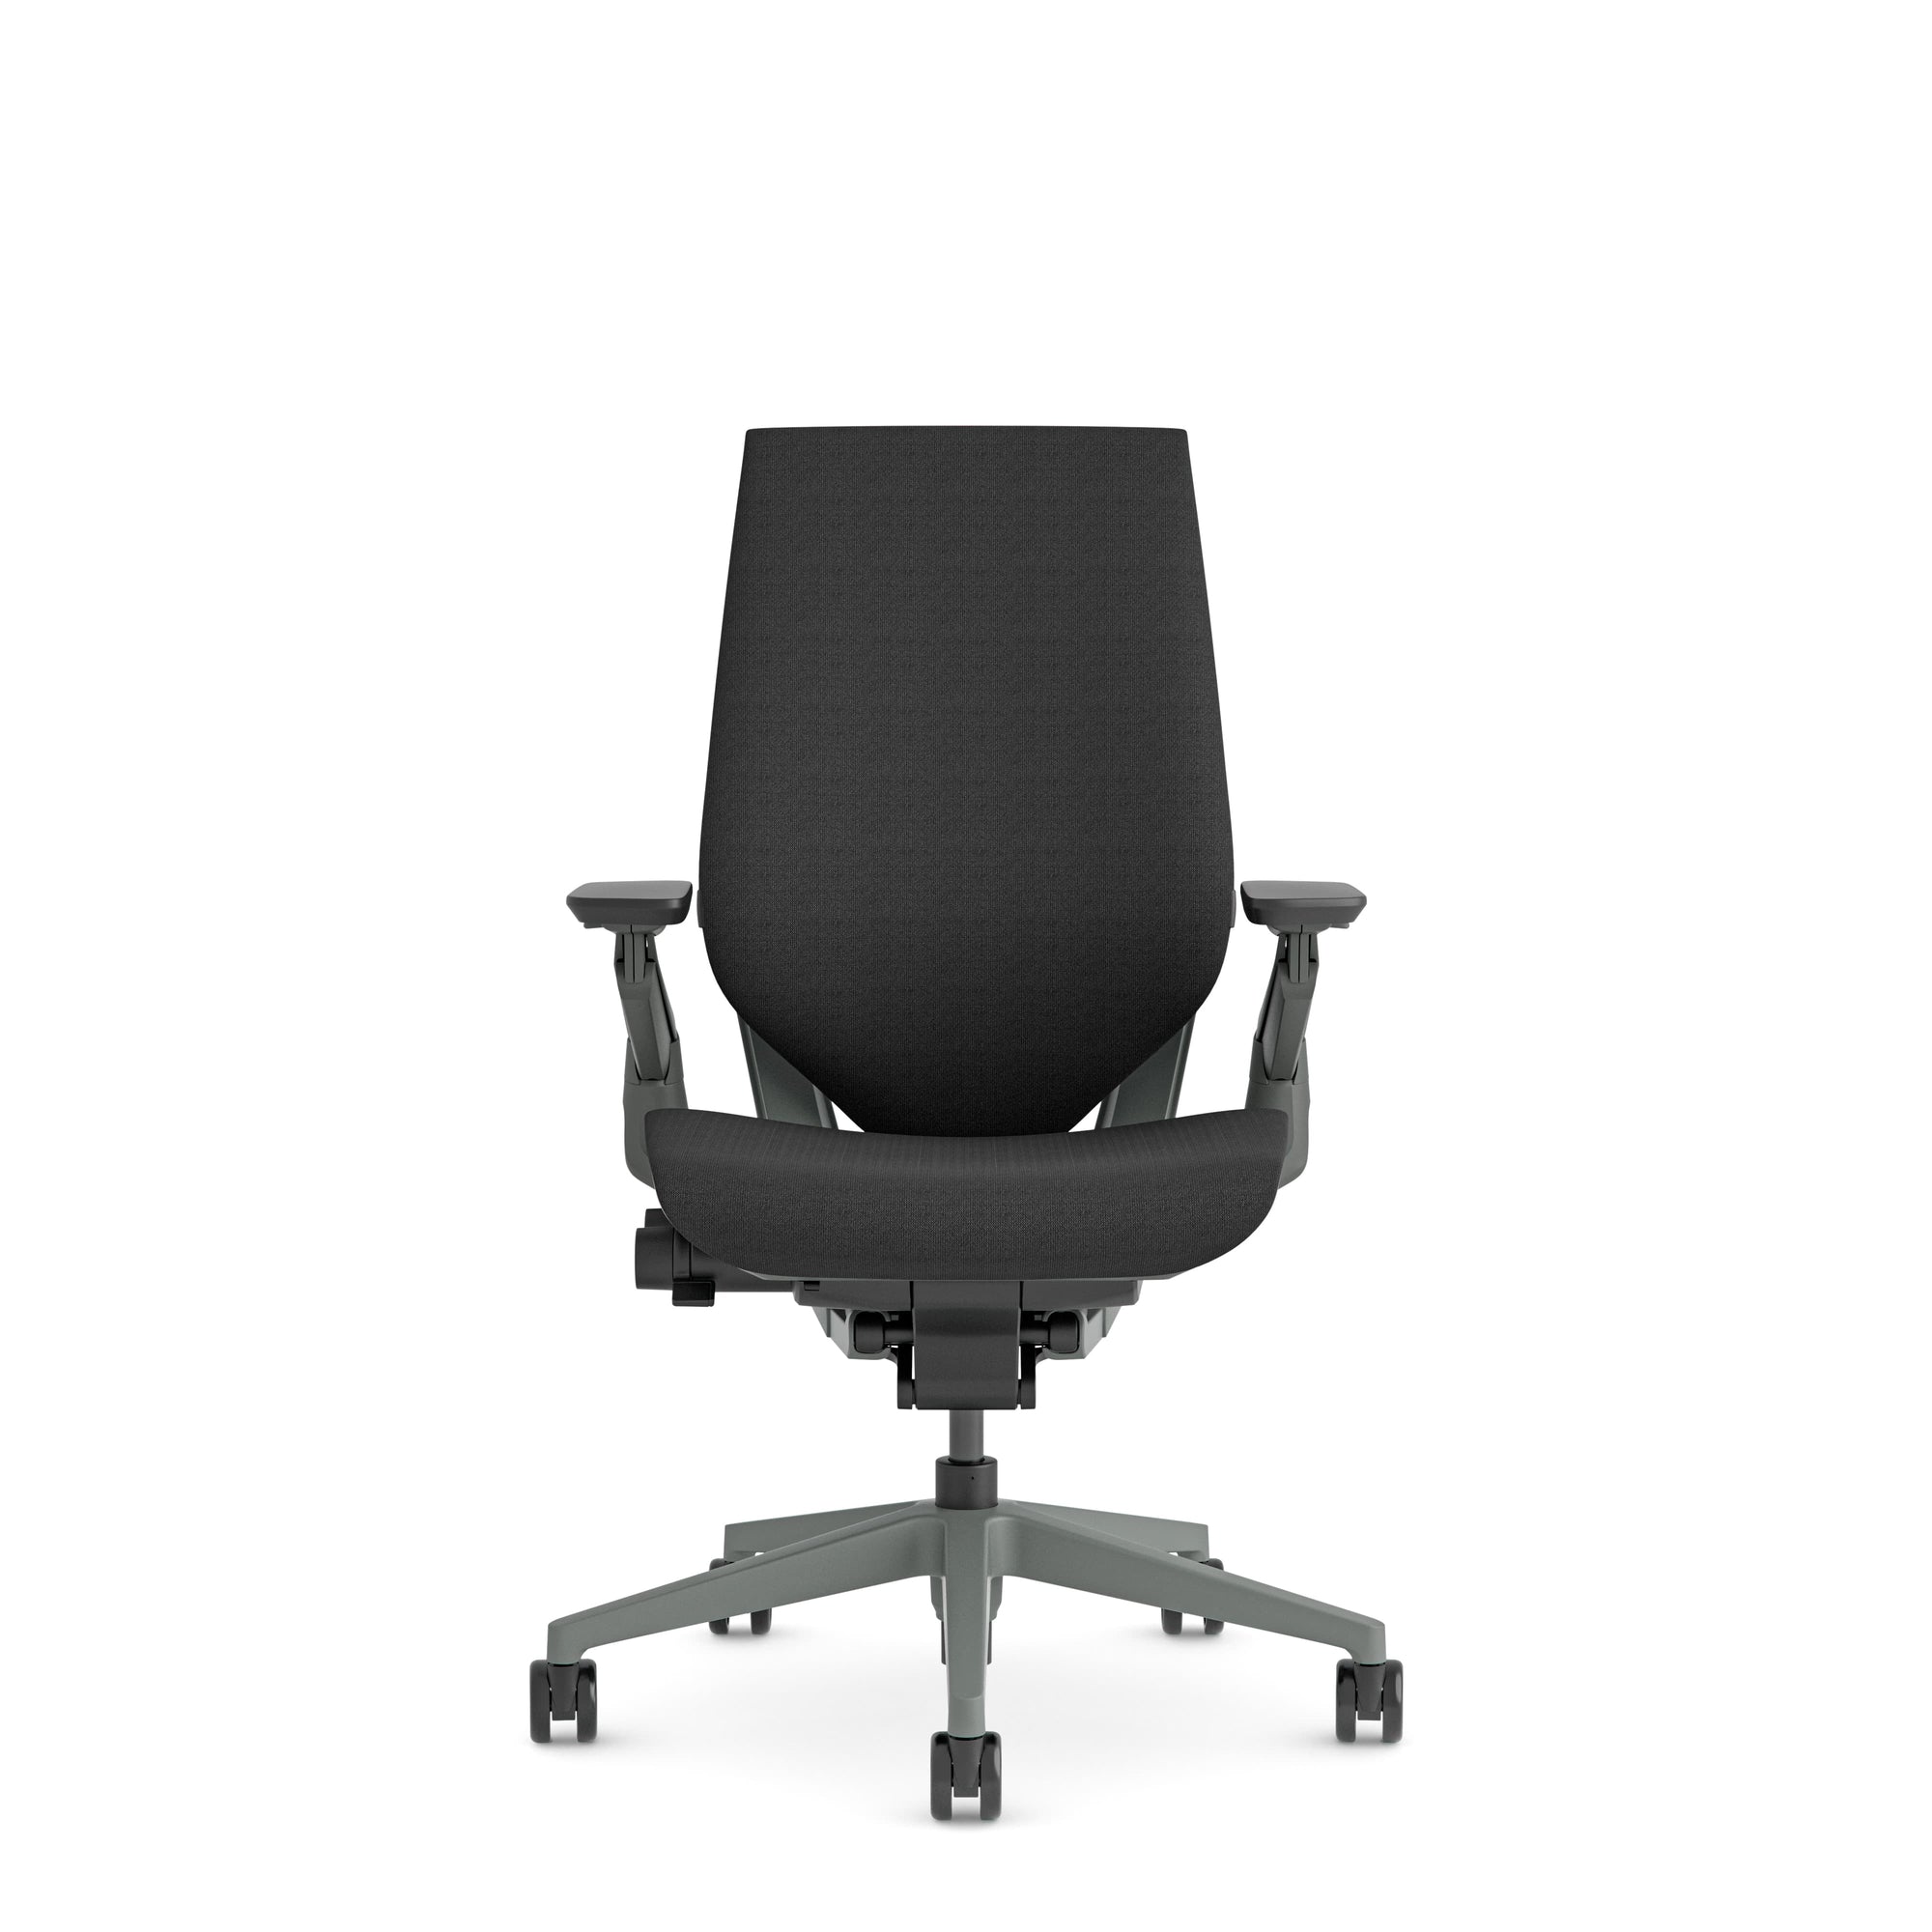 Steelcase Steelcase Gesture Office Chair シェルバック、ダークonダークフレーム、腰椎サポート High  Height Range (17